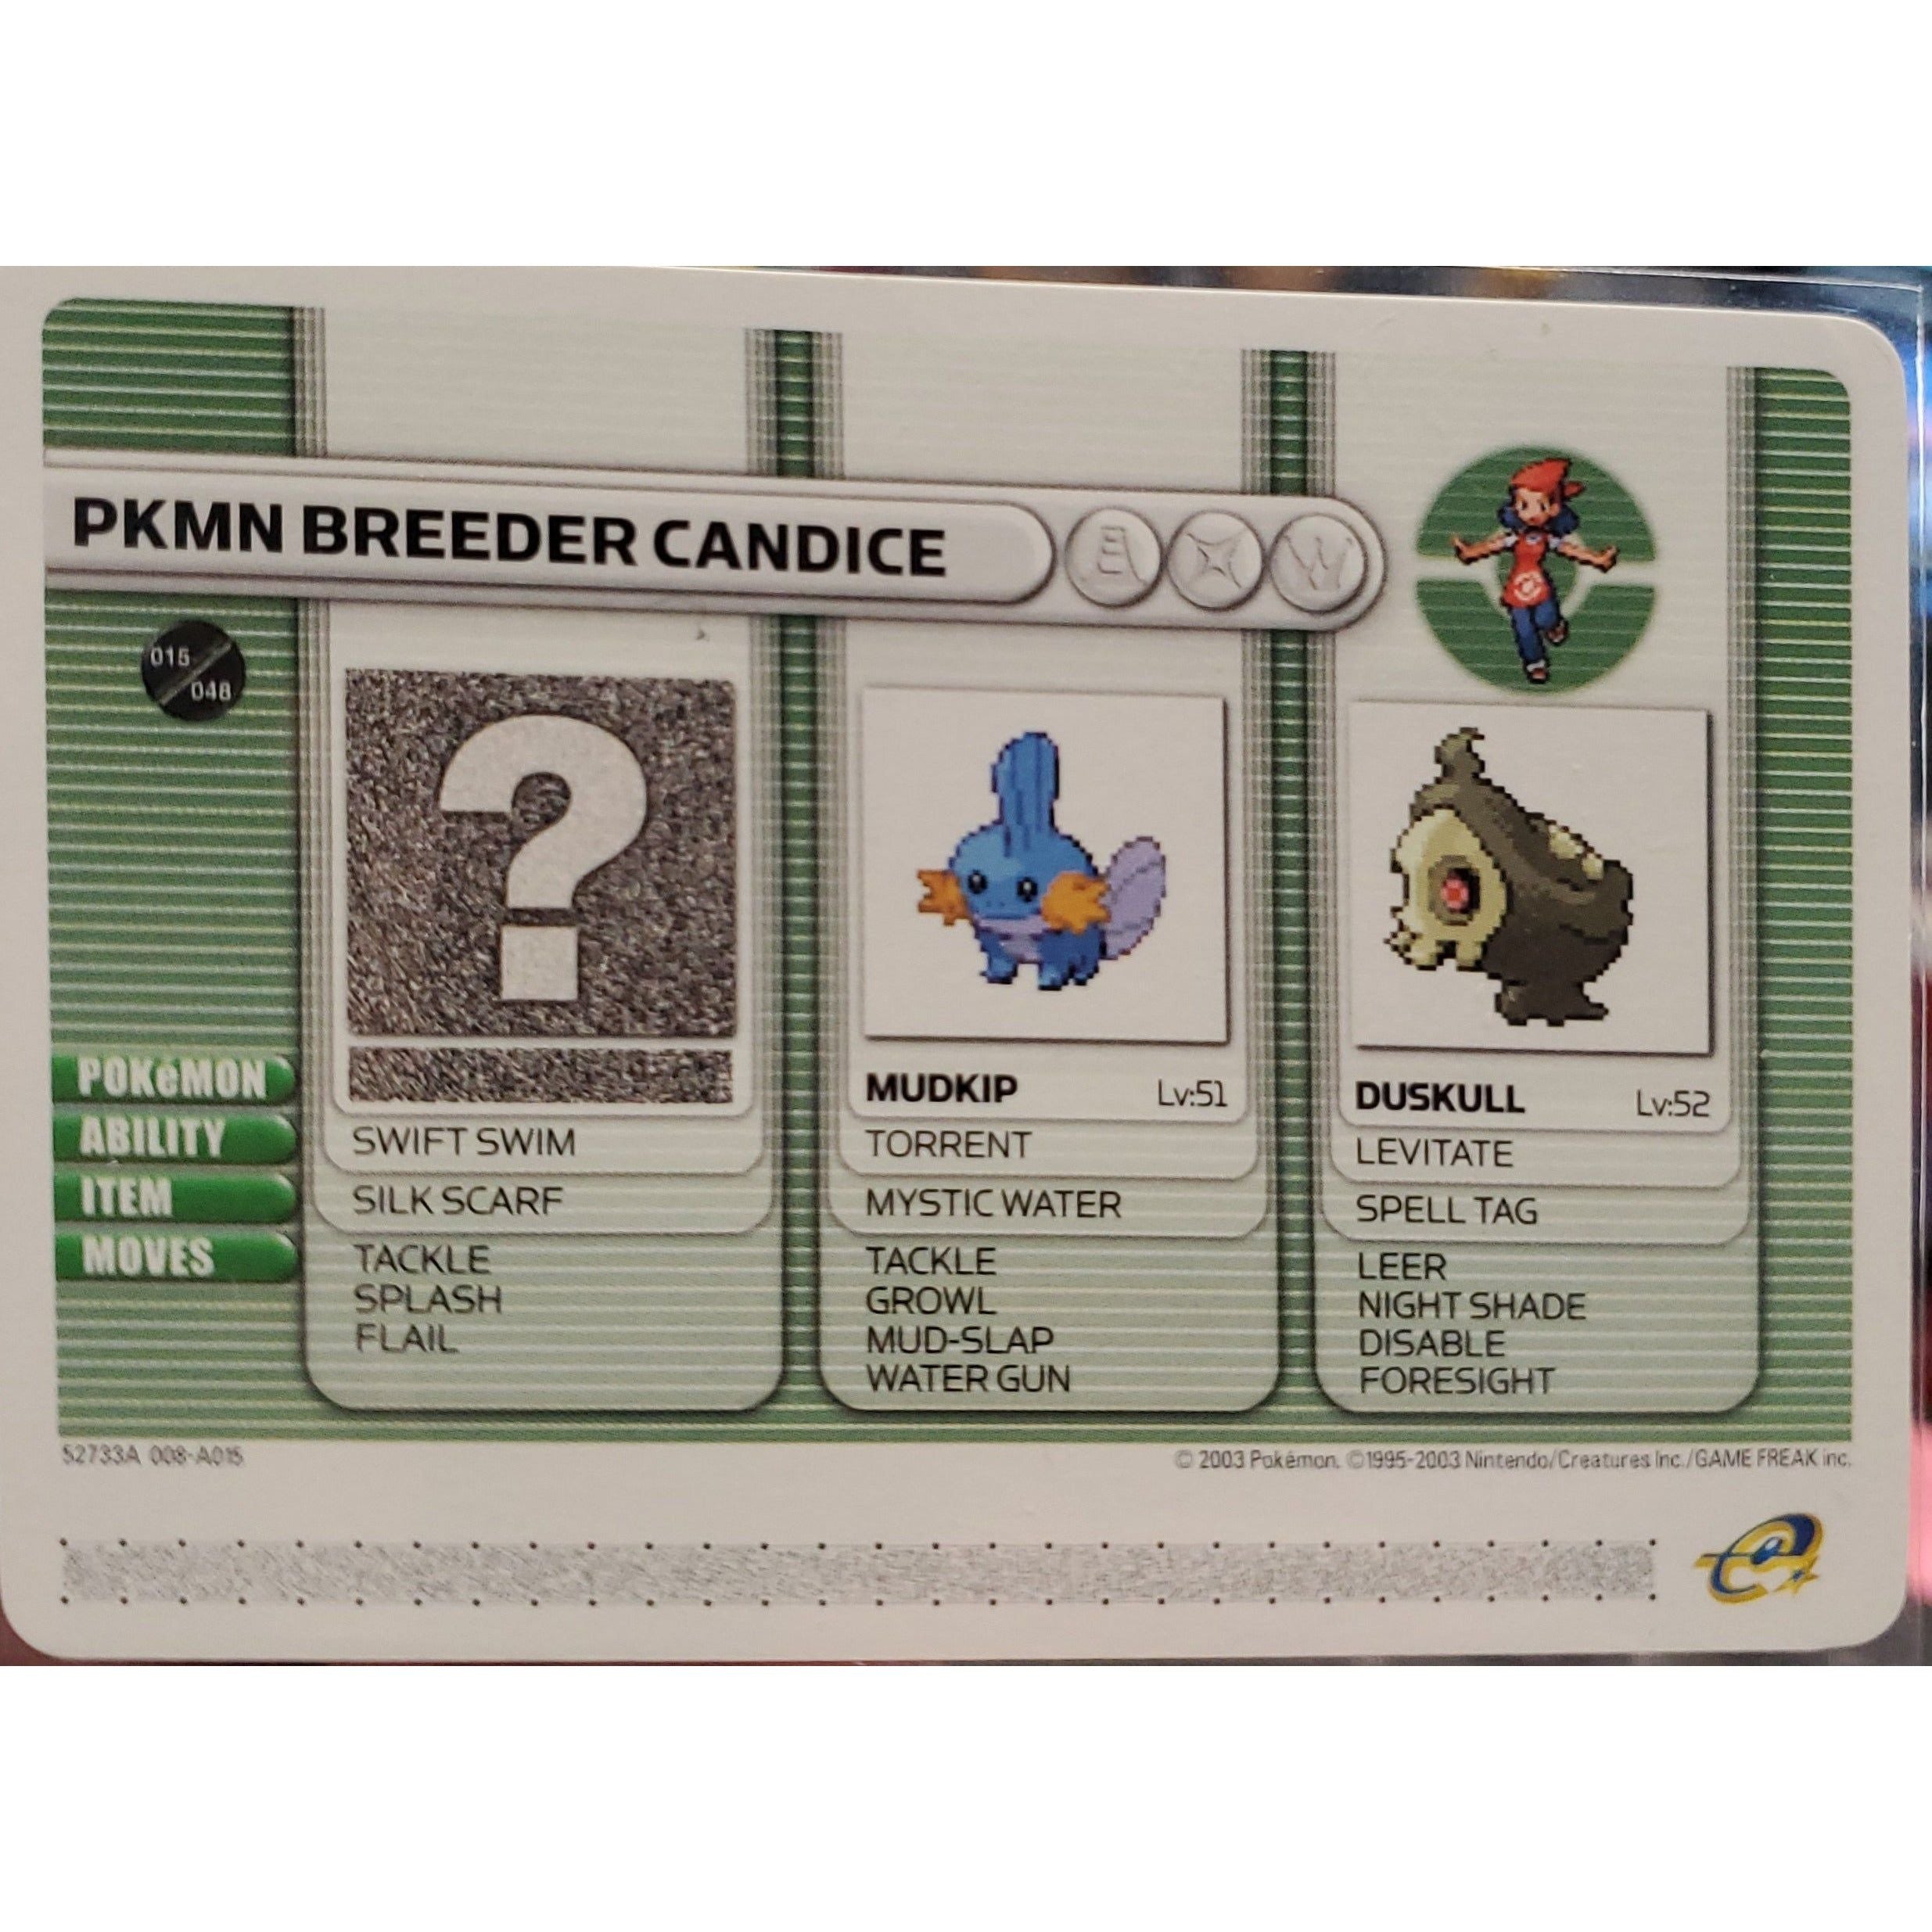 GBA - Pokemon Battle Card - PKMN Breeder Candice